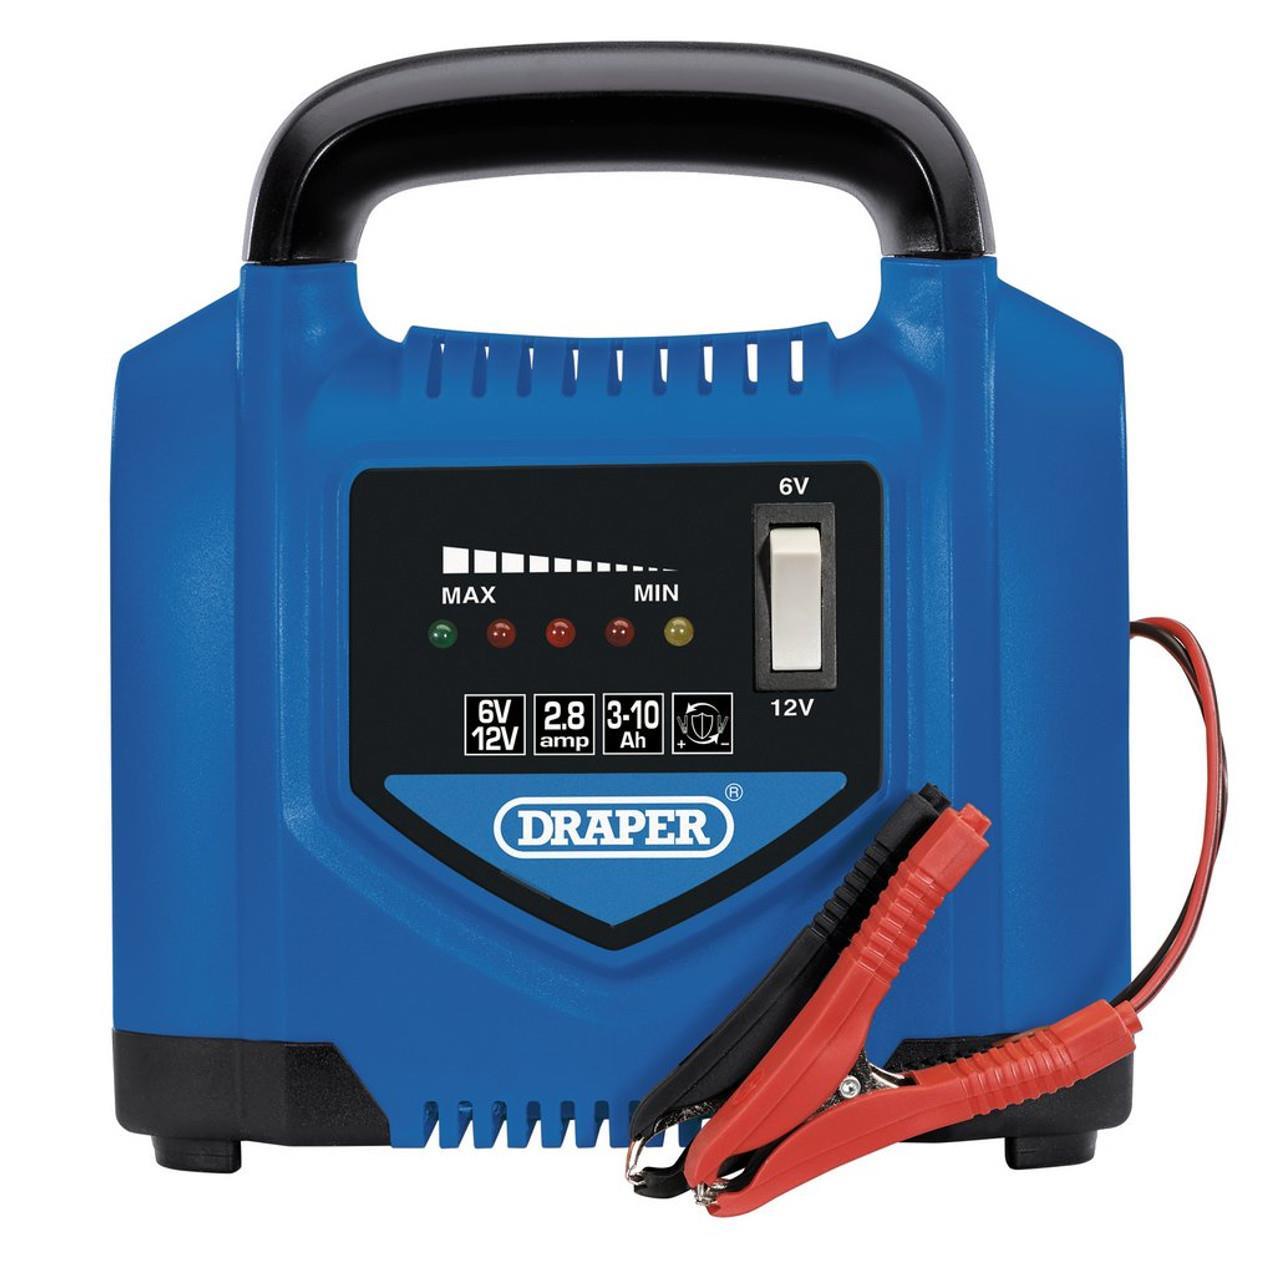 Draper 6V/12V Battery Charger, 2.8A, Blue and Black 53047 - Tools 2U Direct SW